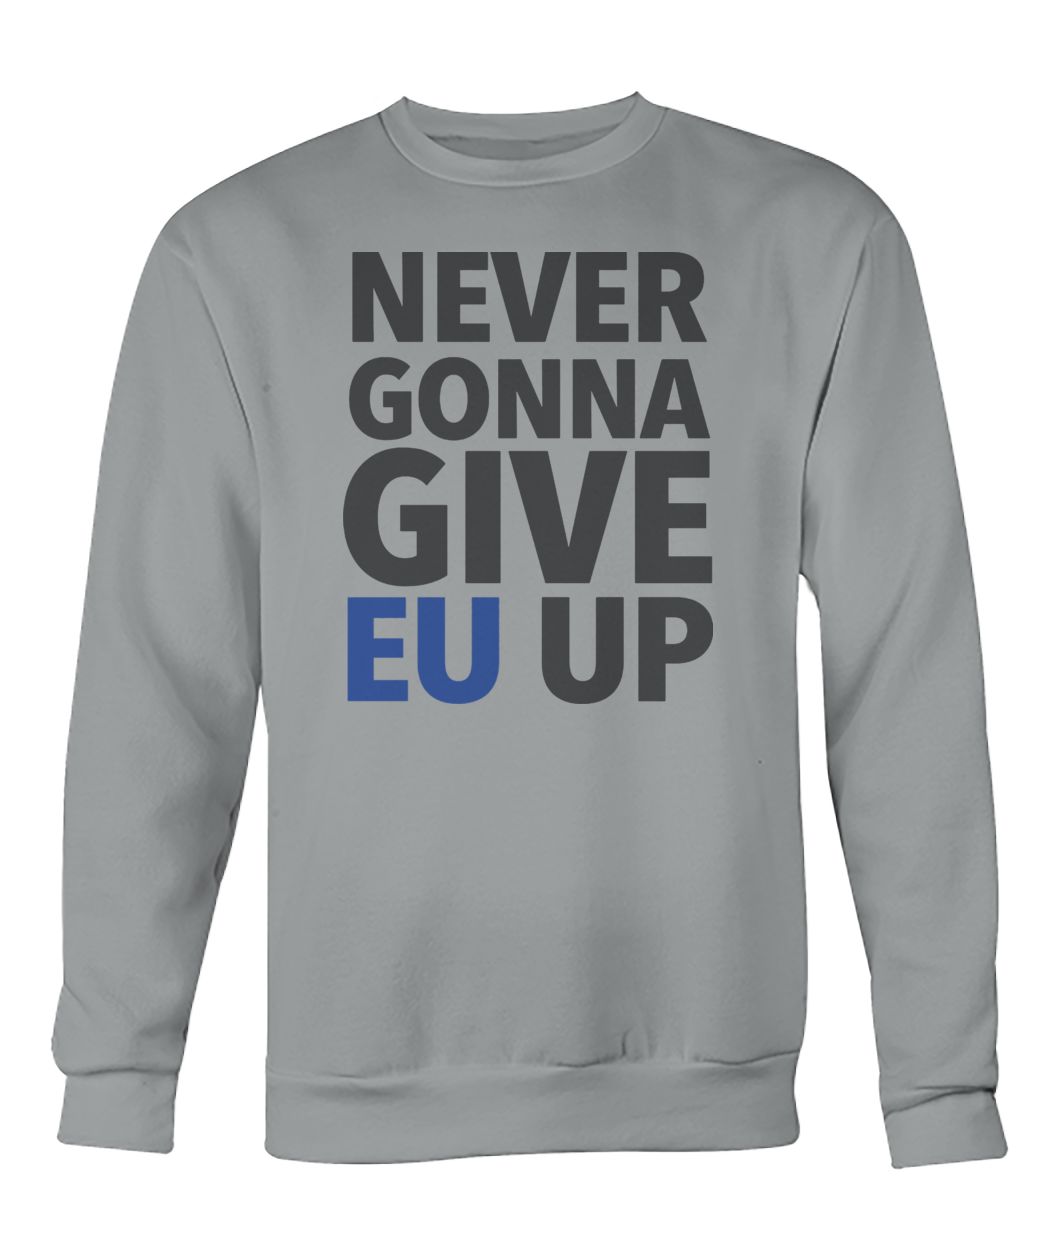 Never gonna give EU up crew neck sweatshirt